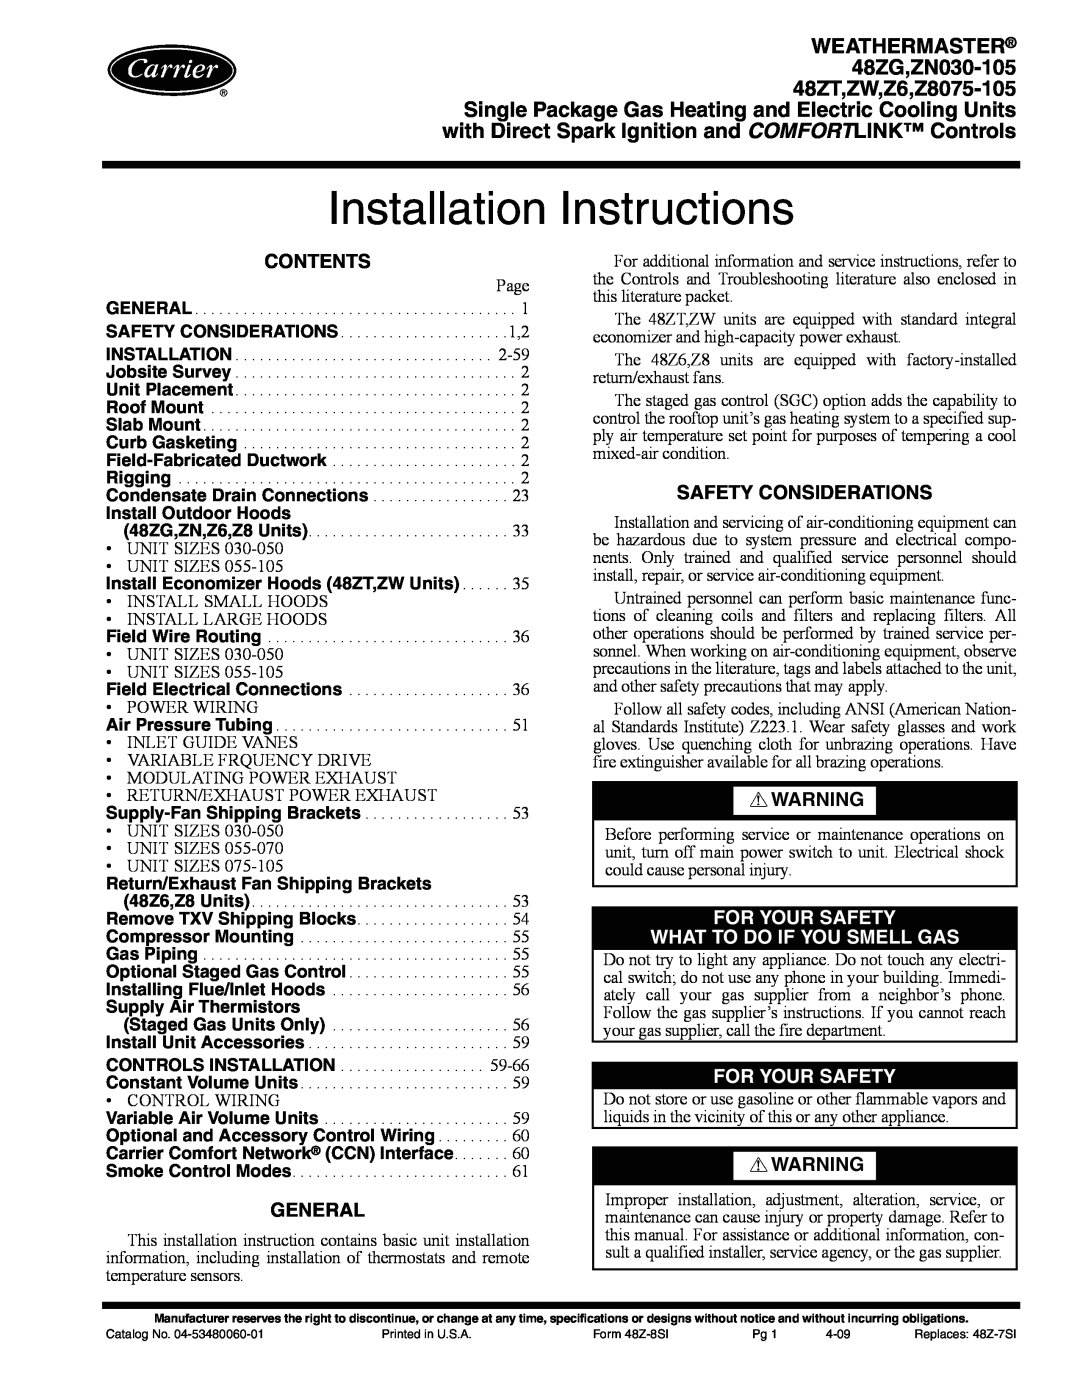 Carrier installation instructions Installation Instructions, WEATHERMASTER 48ZG,ZN030-105 48ZT,ZW,Z6,Z8075-105 